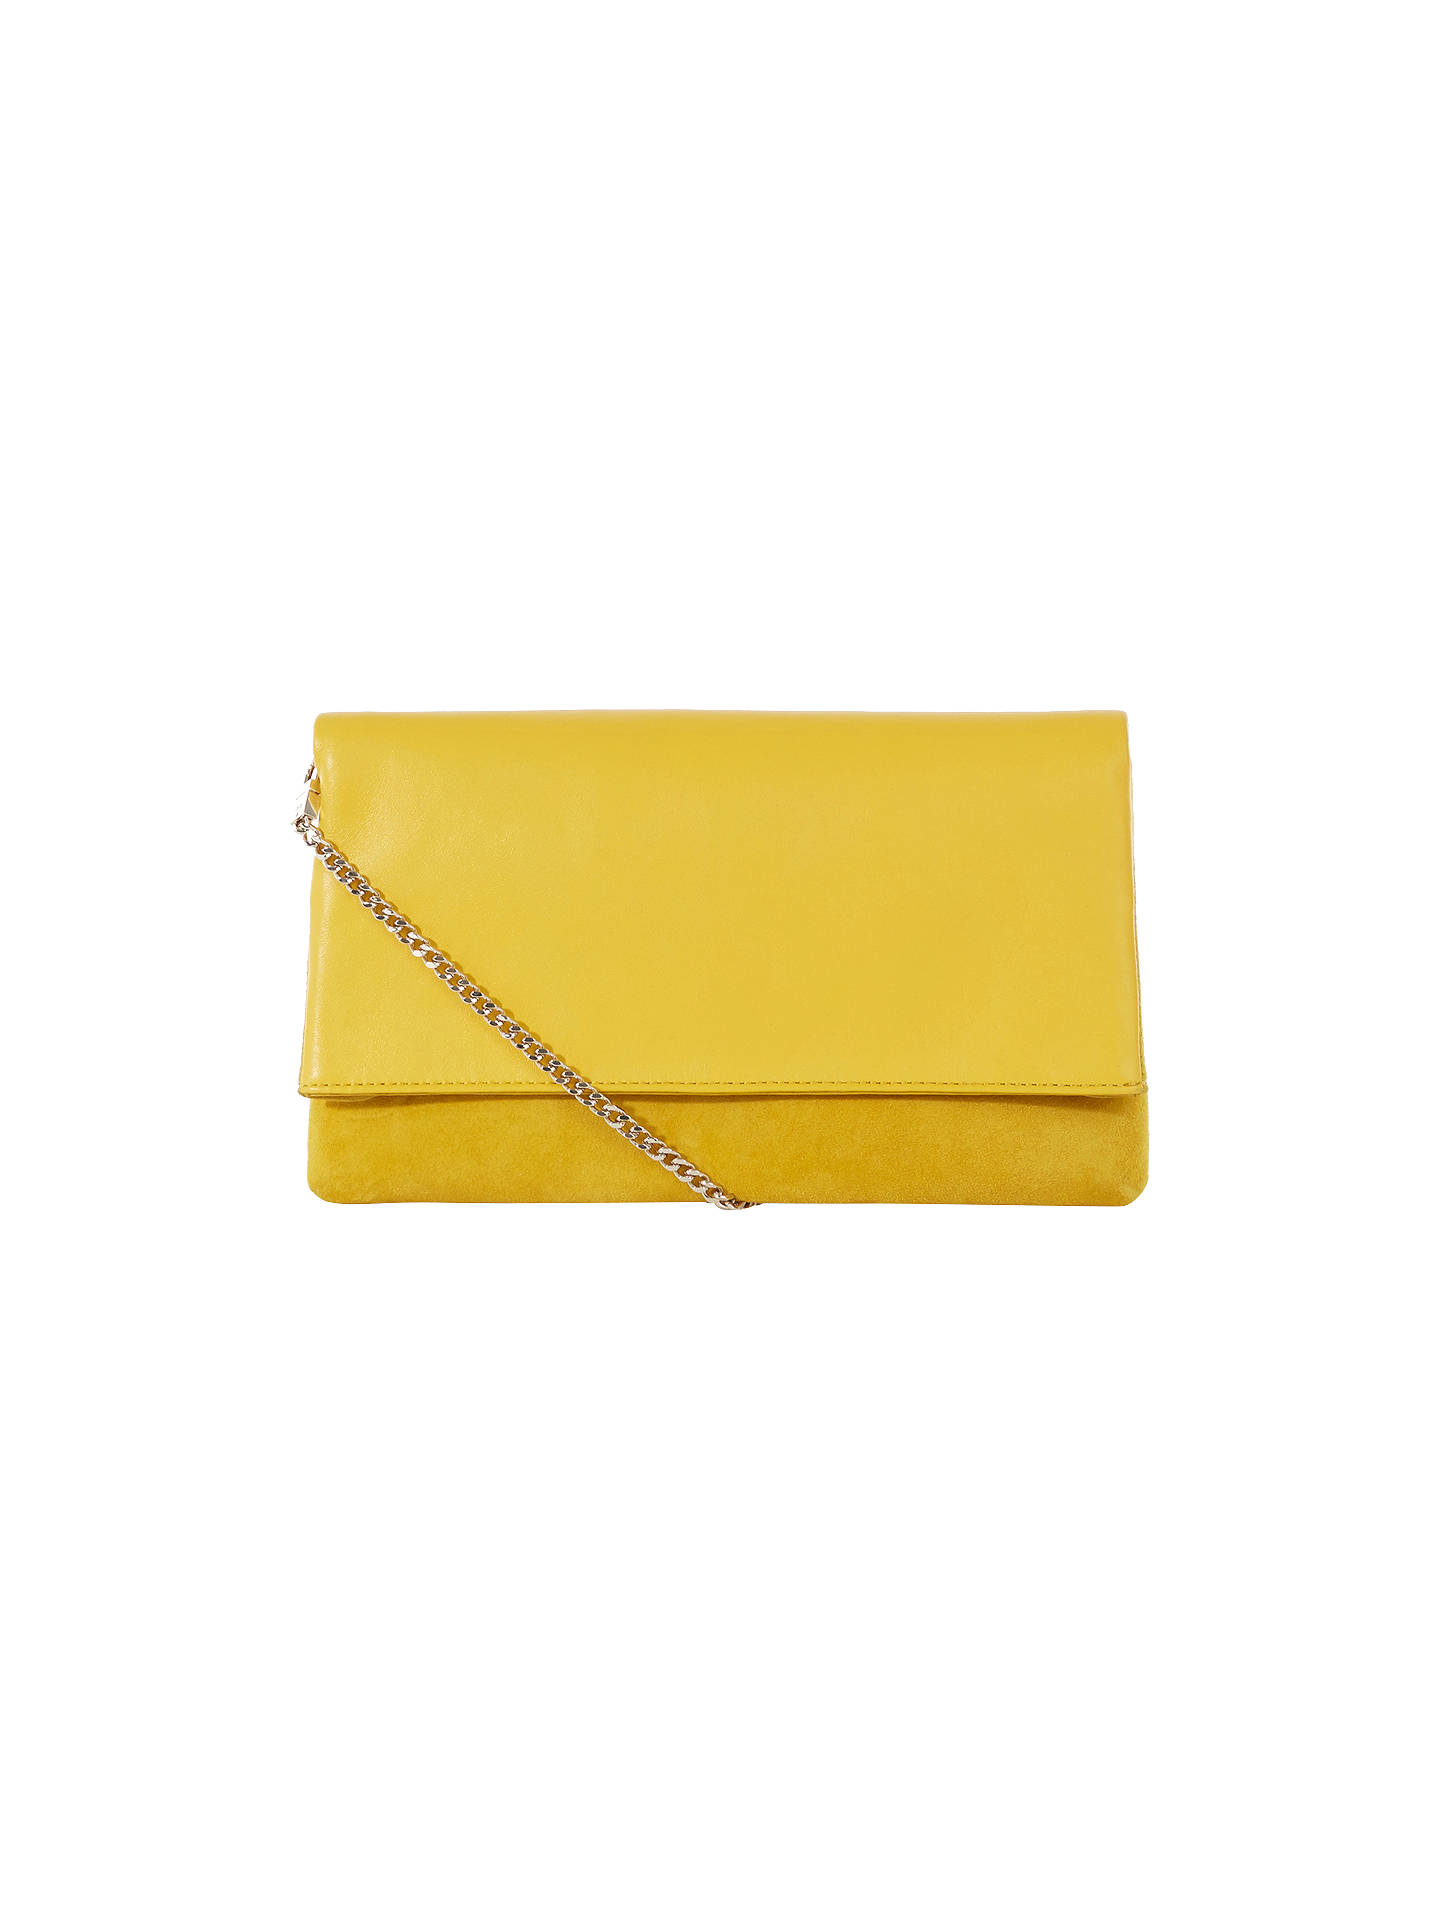 Karen Millen Brompton Leather And Suede Clutch Bag, Yellow at John ...